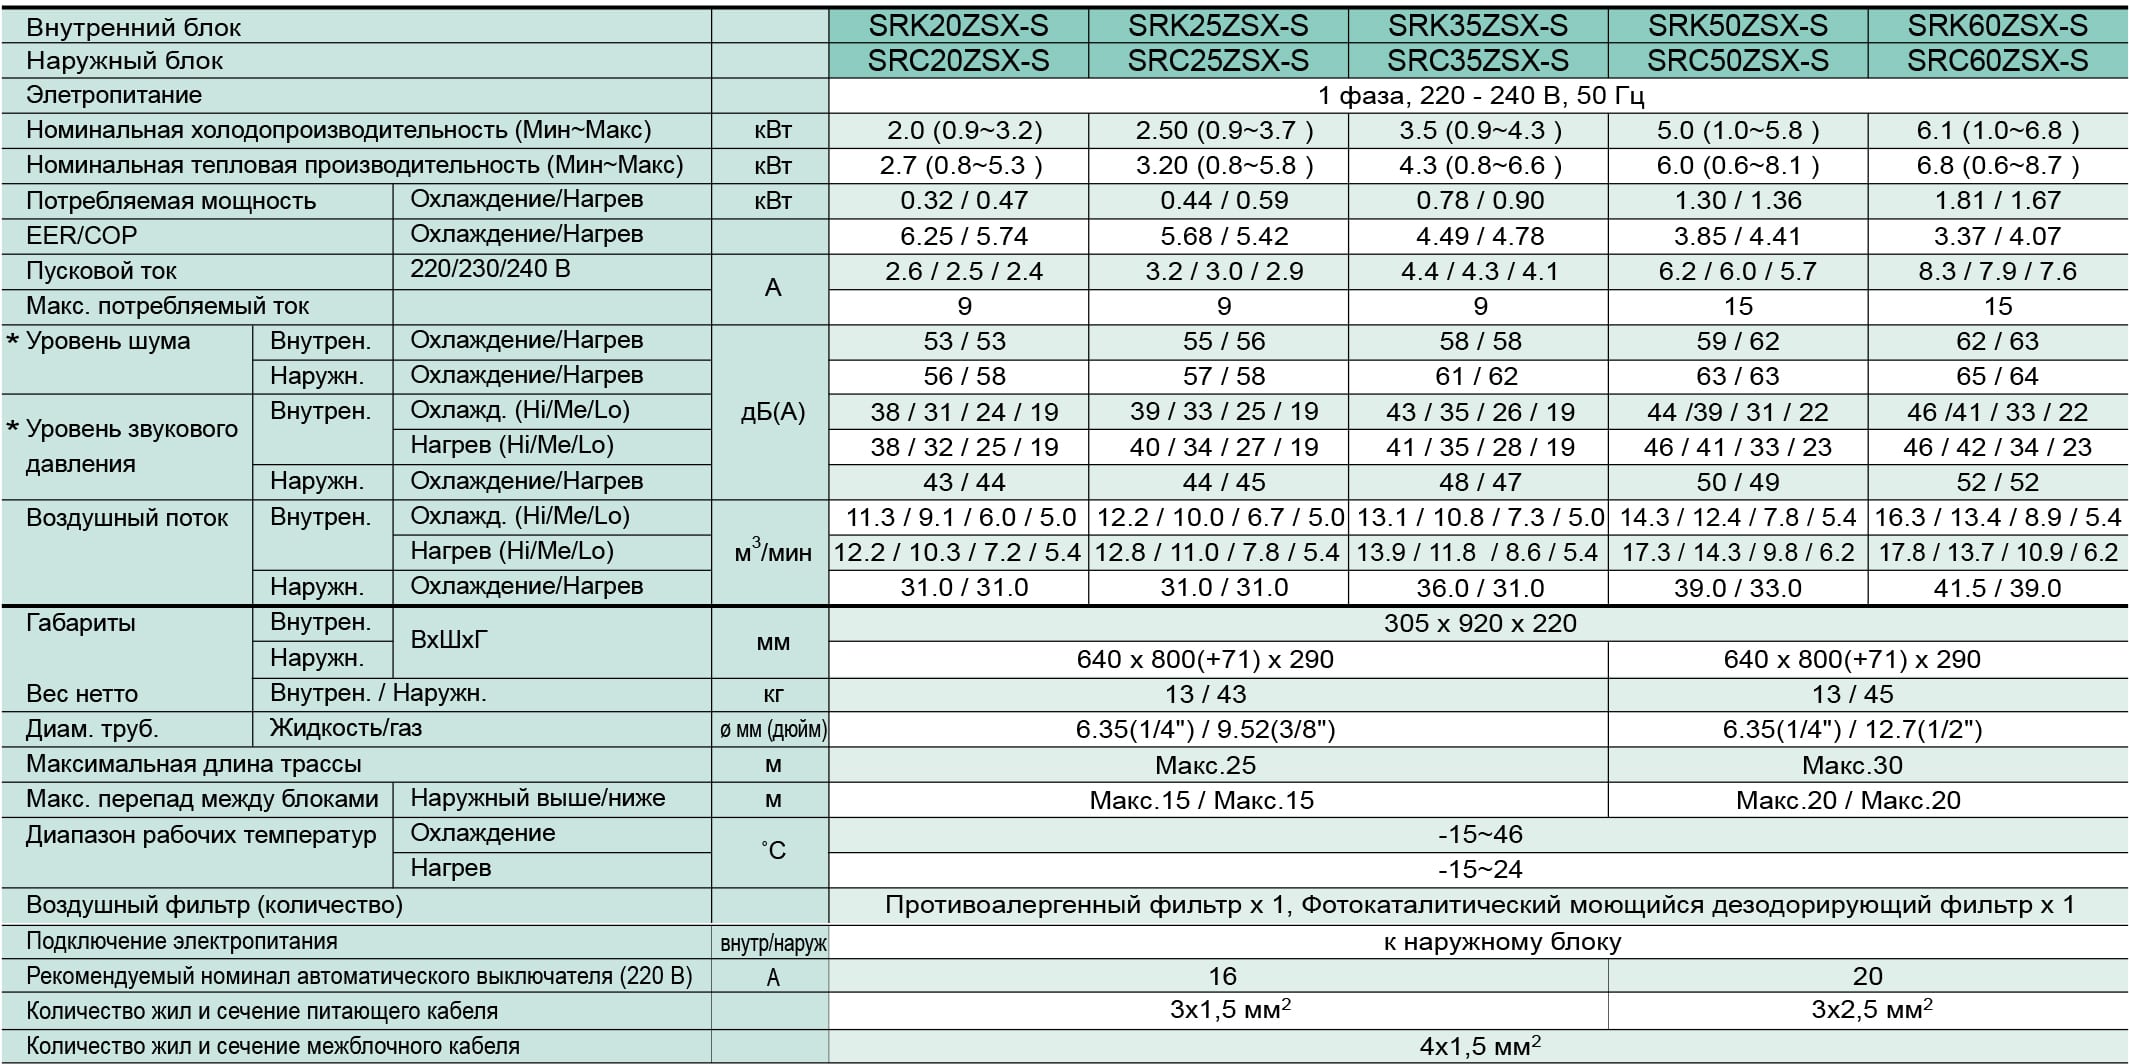 Технические характеристики кондиционера Mitsubishi Heavy SRK60ZSX-S / SRC60ZSX-S серии ZSX-S Inverter